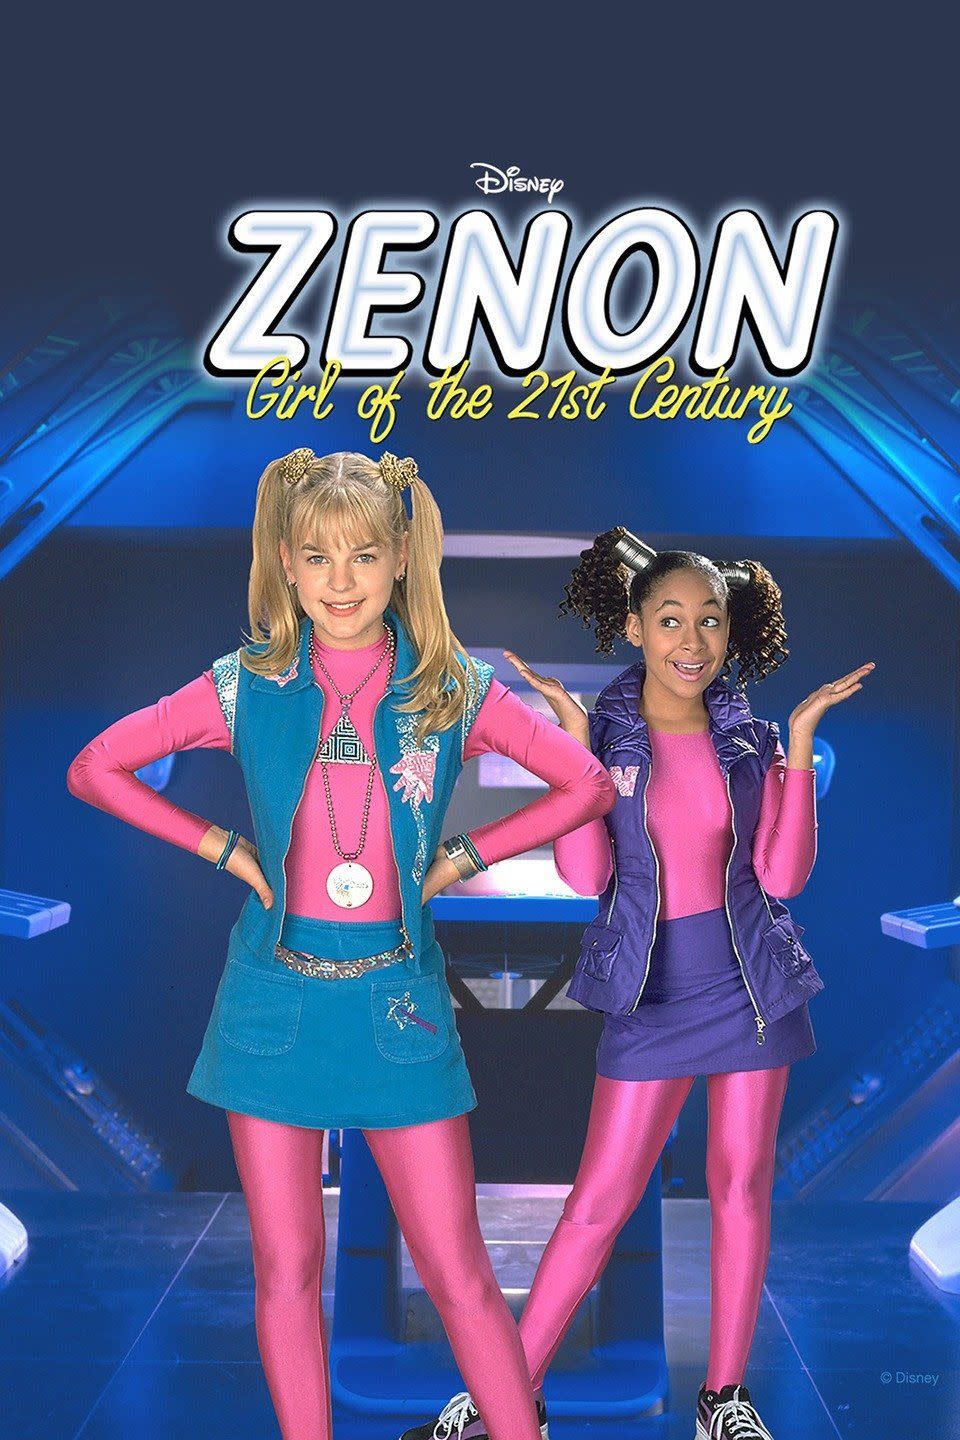 2. <i>Zenon: Girl of the 21st Century</i>